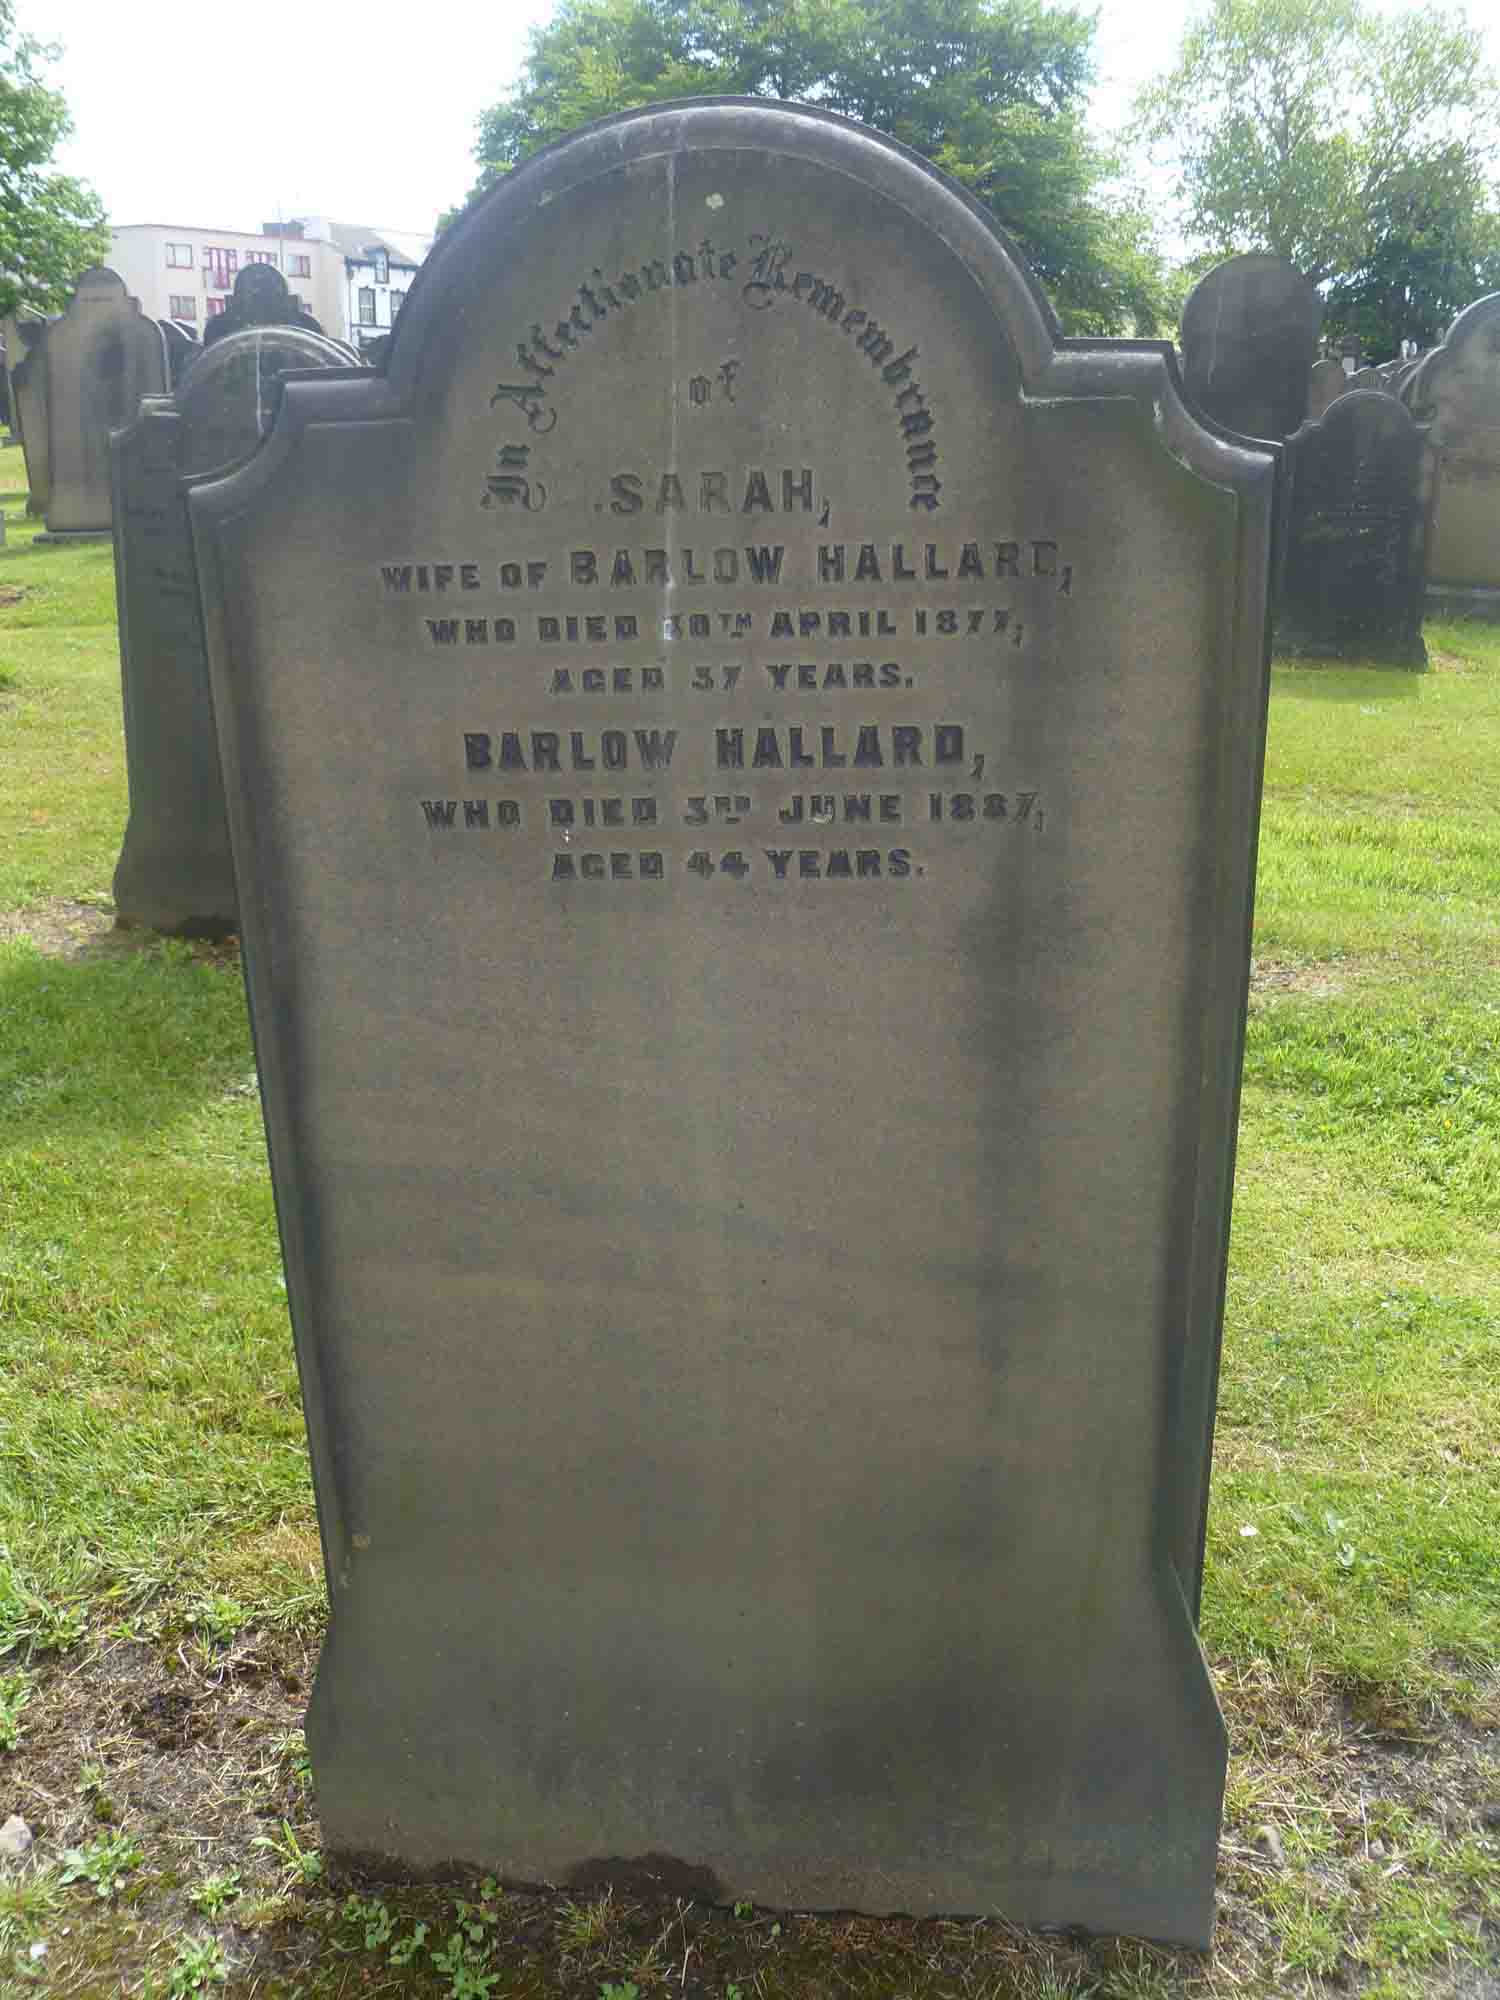 Hallard, Sarah & Barlow (H Left 489)